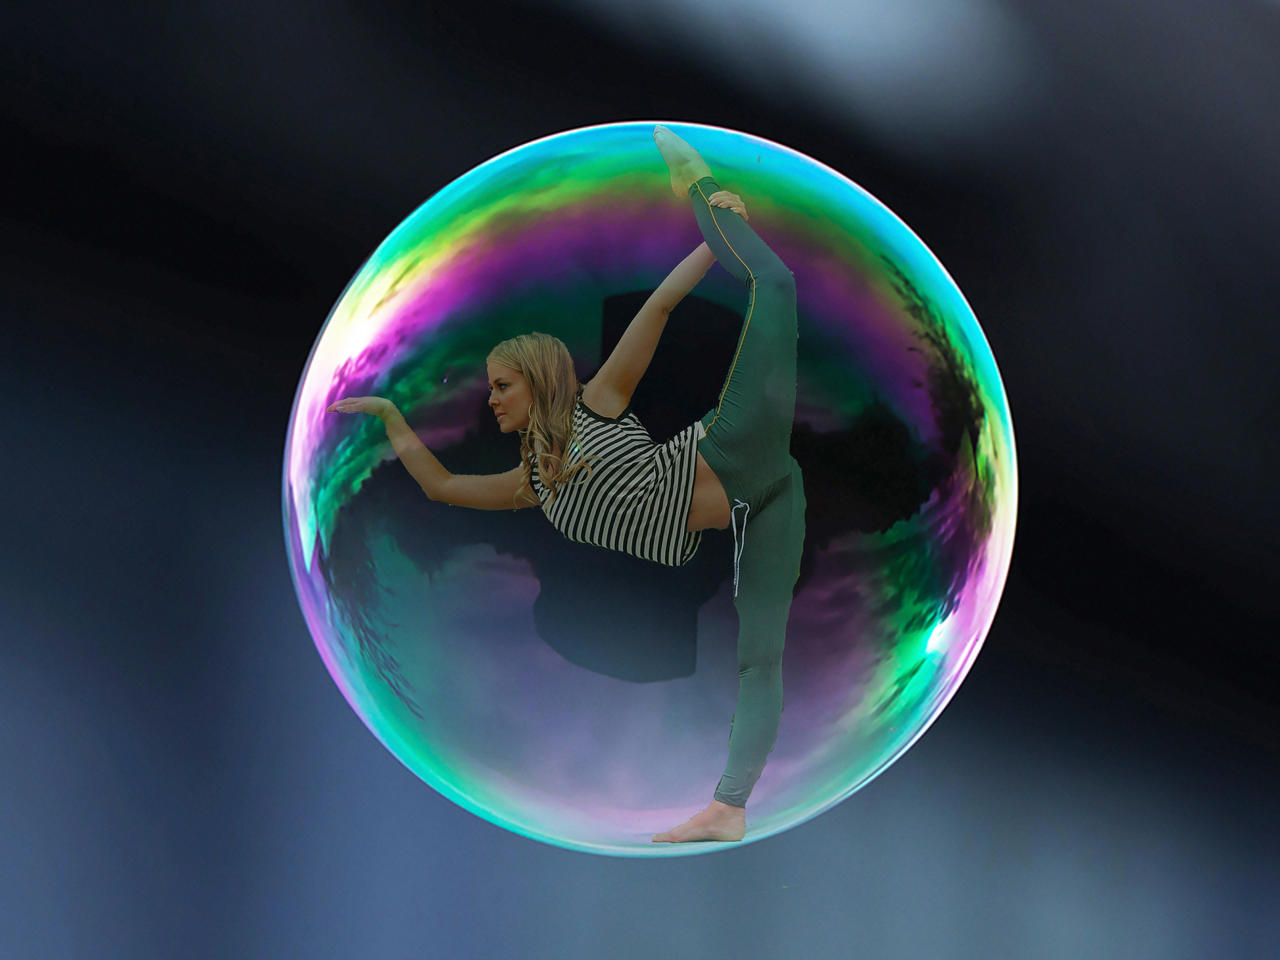 Carmen Electra Bubble Stretch by blunose2772 on DeviantArt